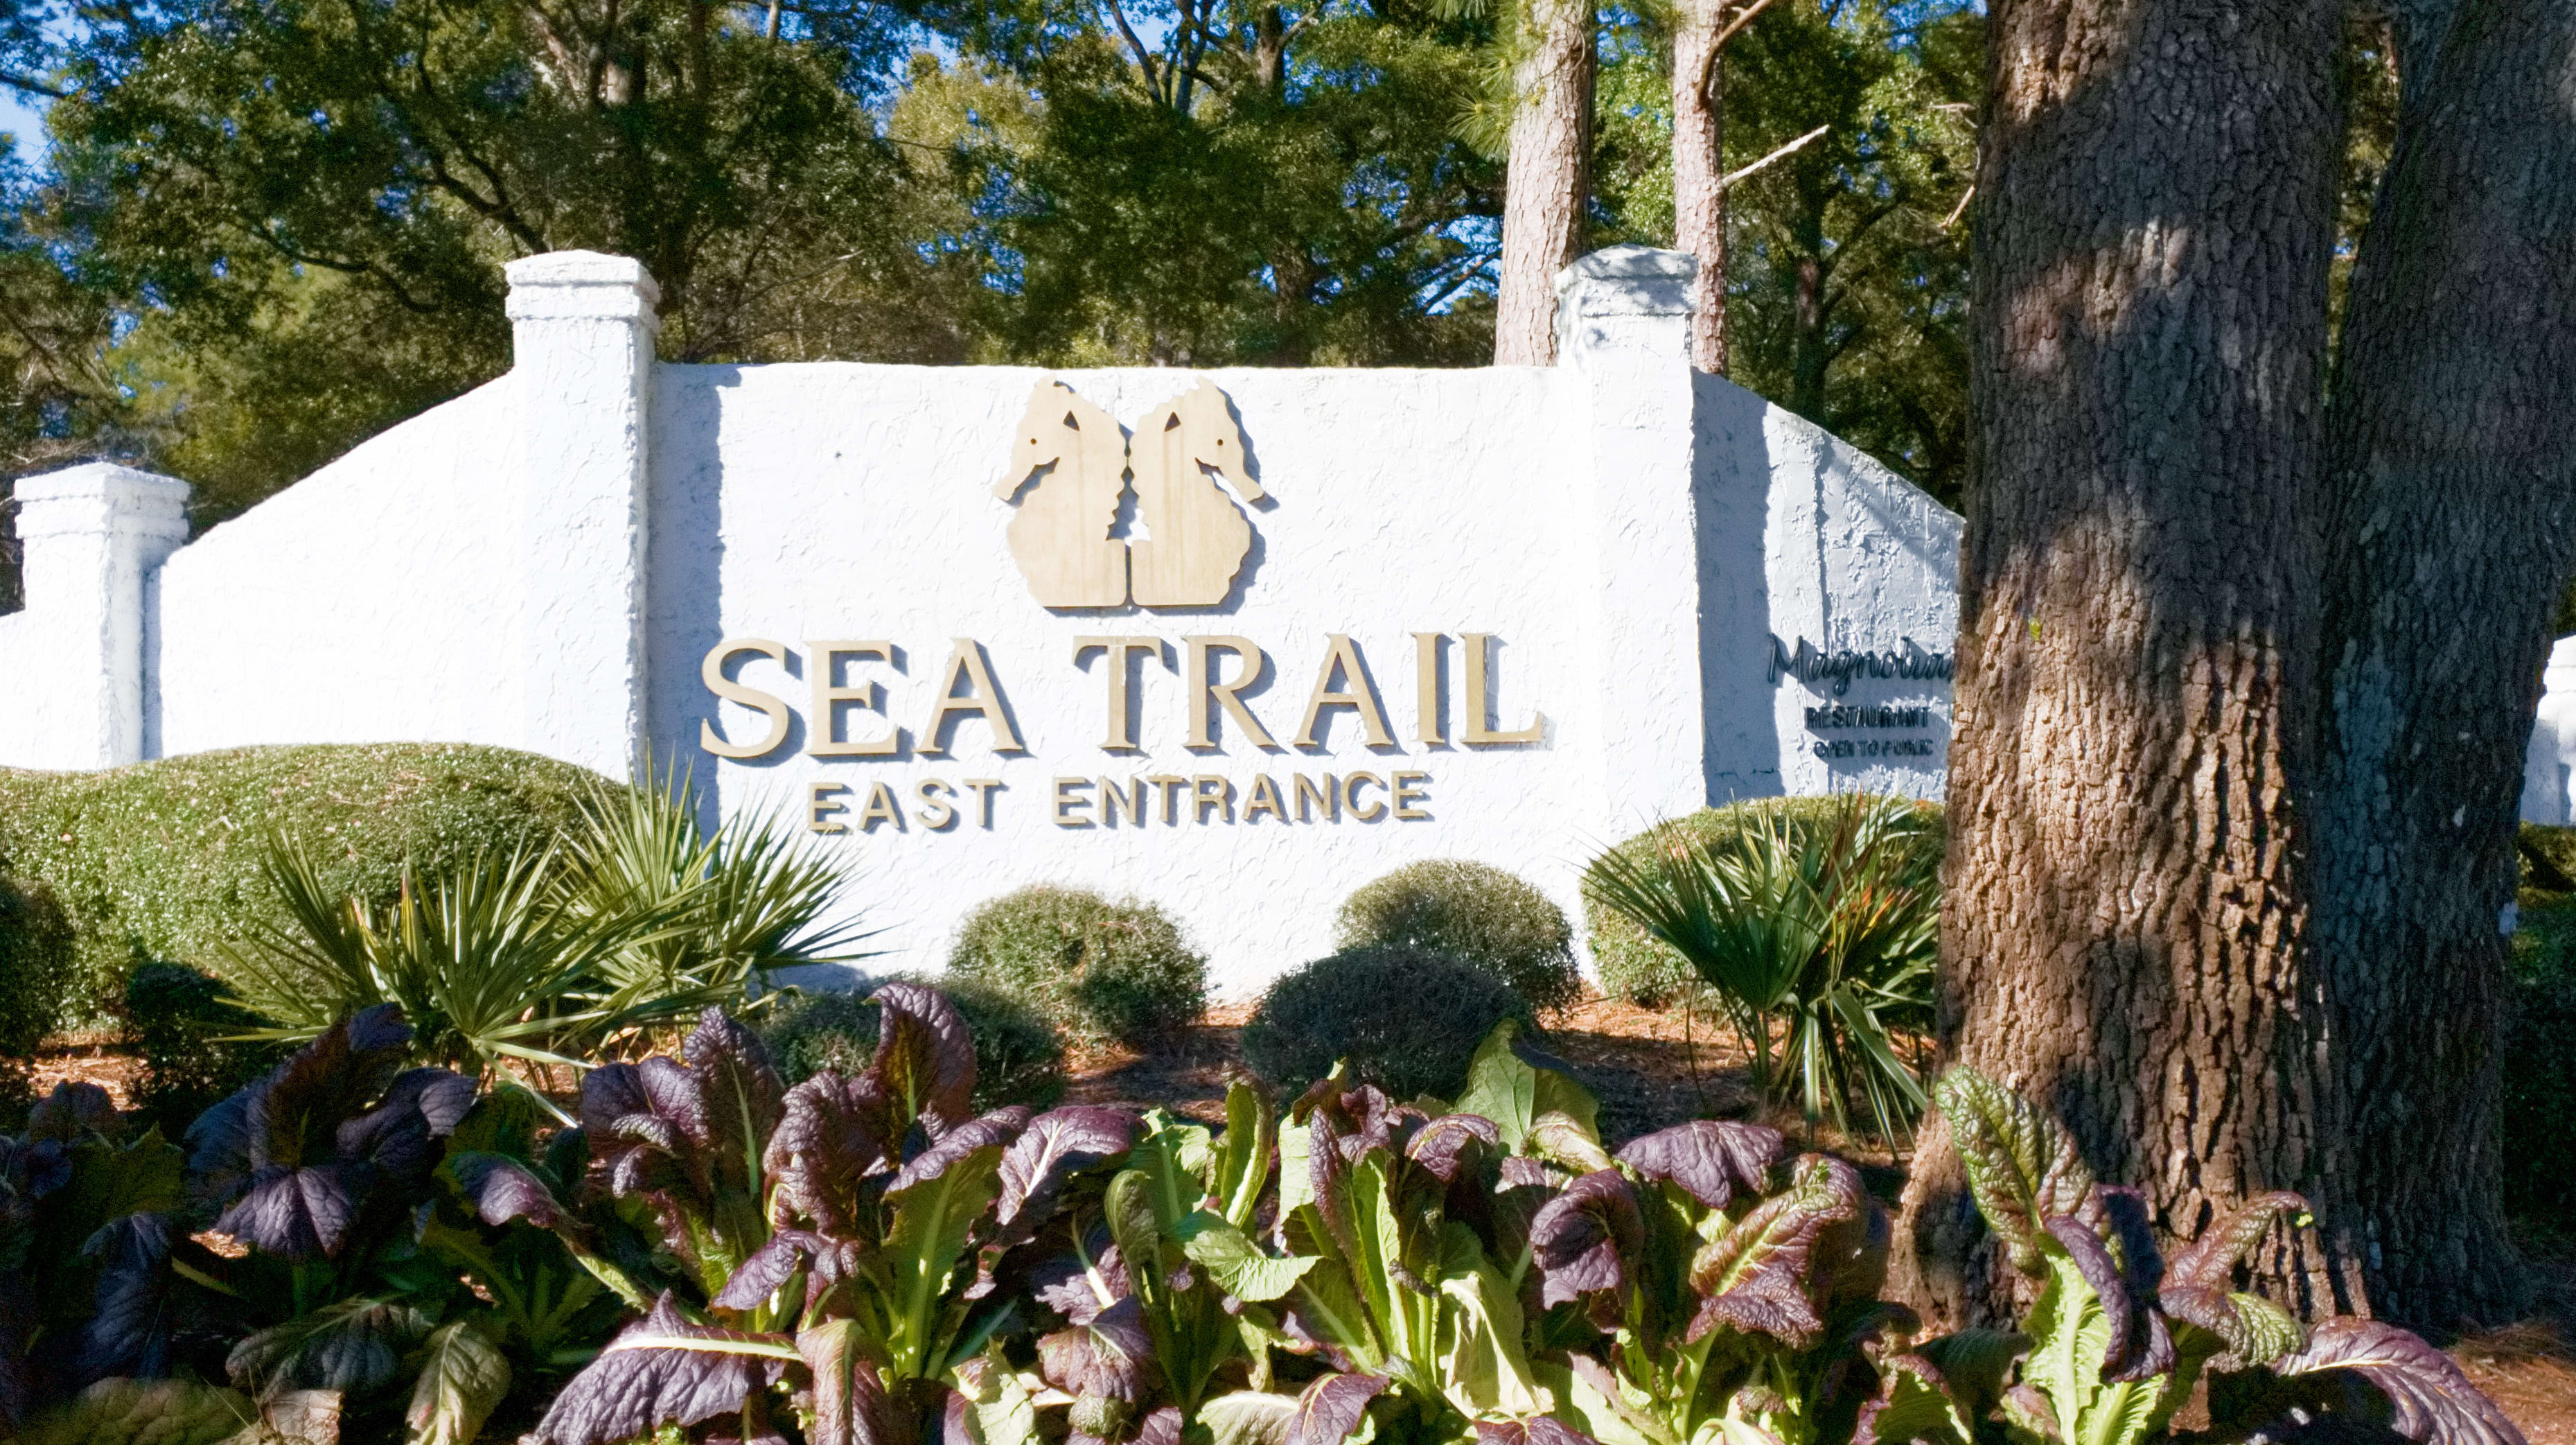 Sea Trail Plantation